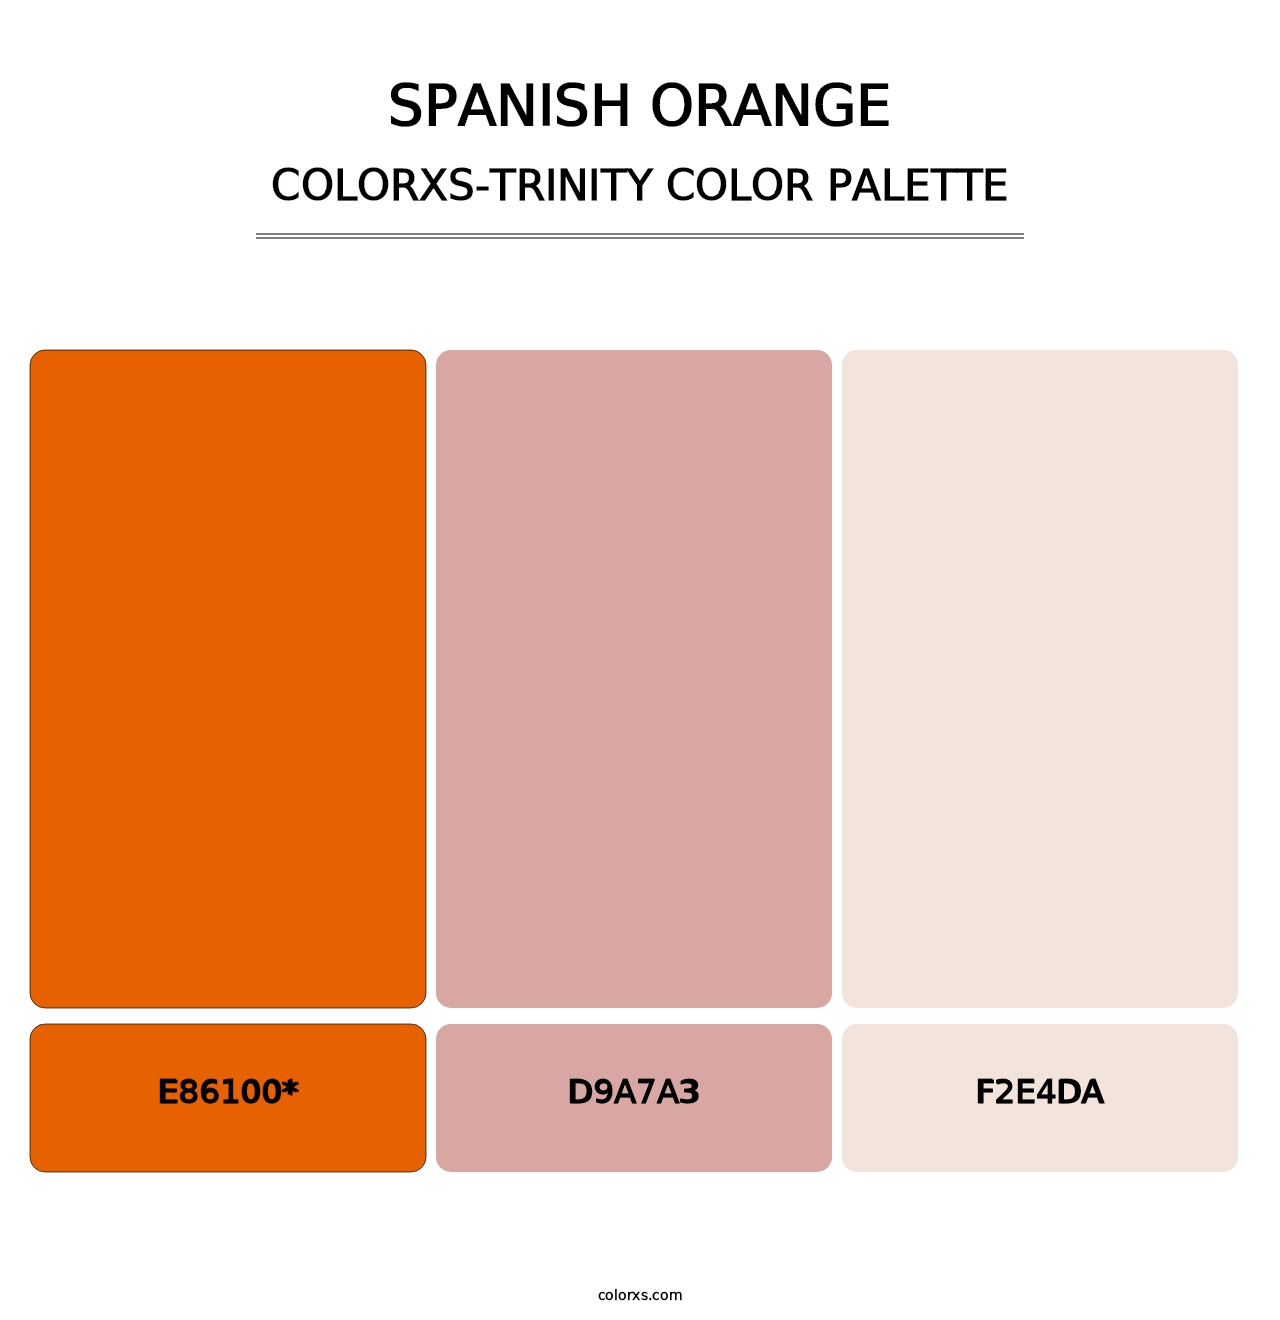 Spanish Orange - Colorxs Trinity Palette